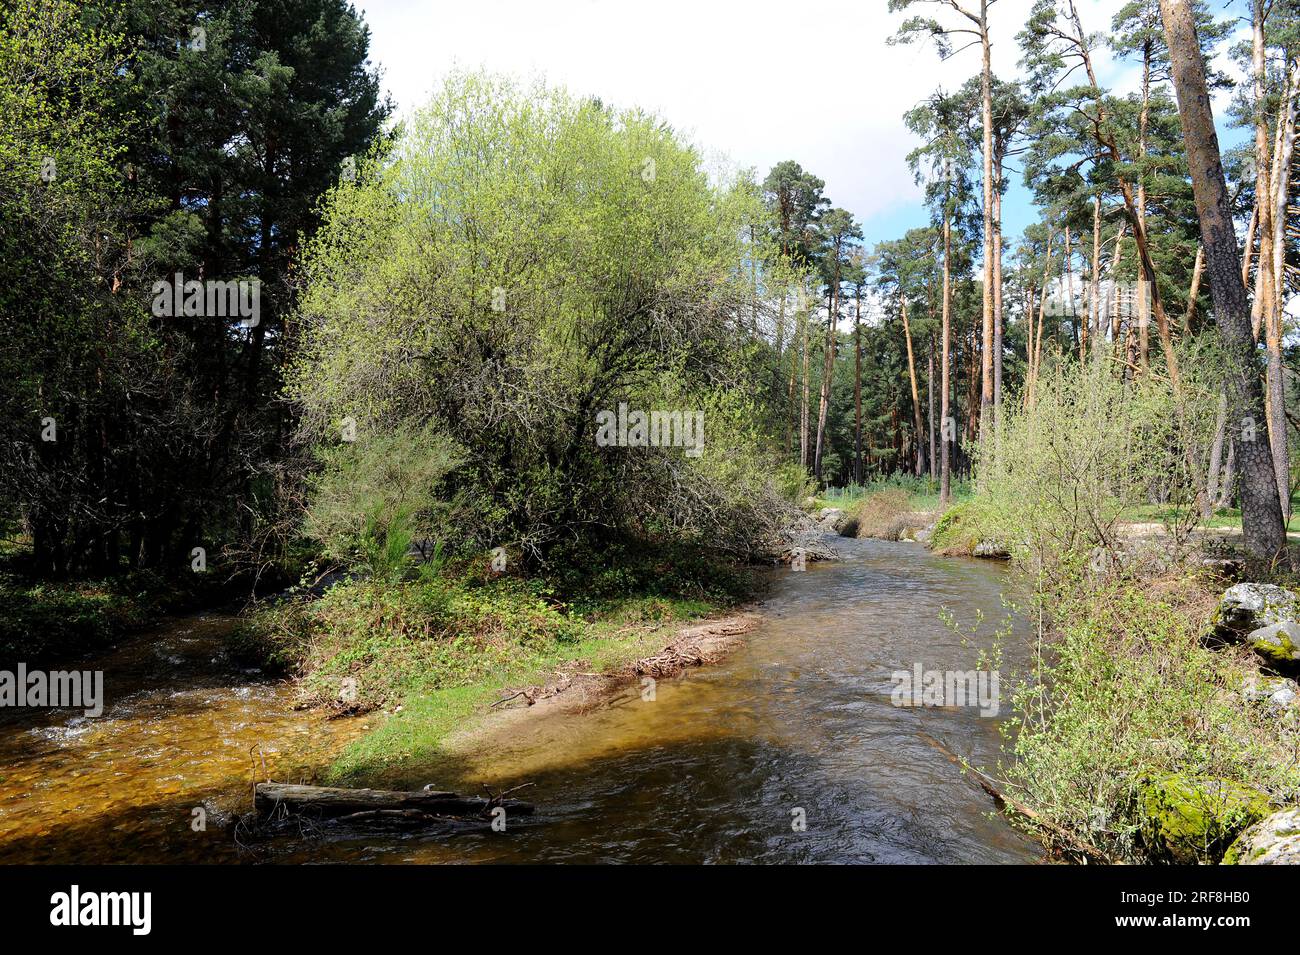 Eresma river in Valsain with scots pines (Pinus sylvestris). Segovia, Castilla y Leon, Spain. Stock Photo